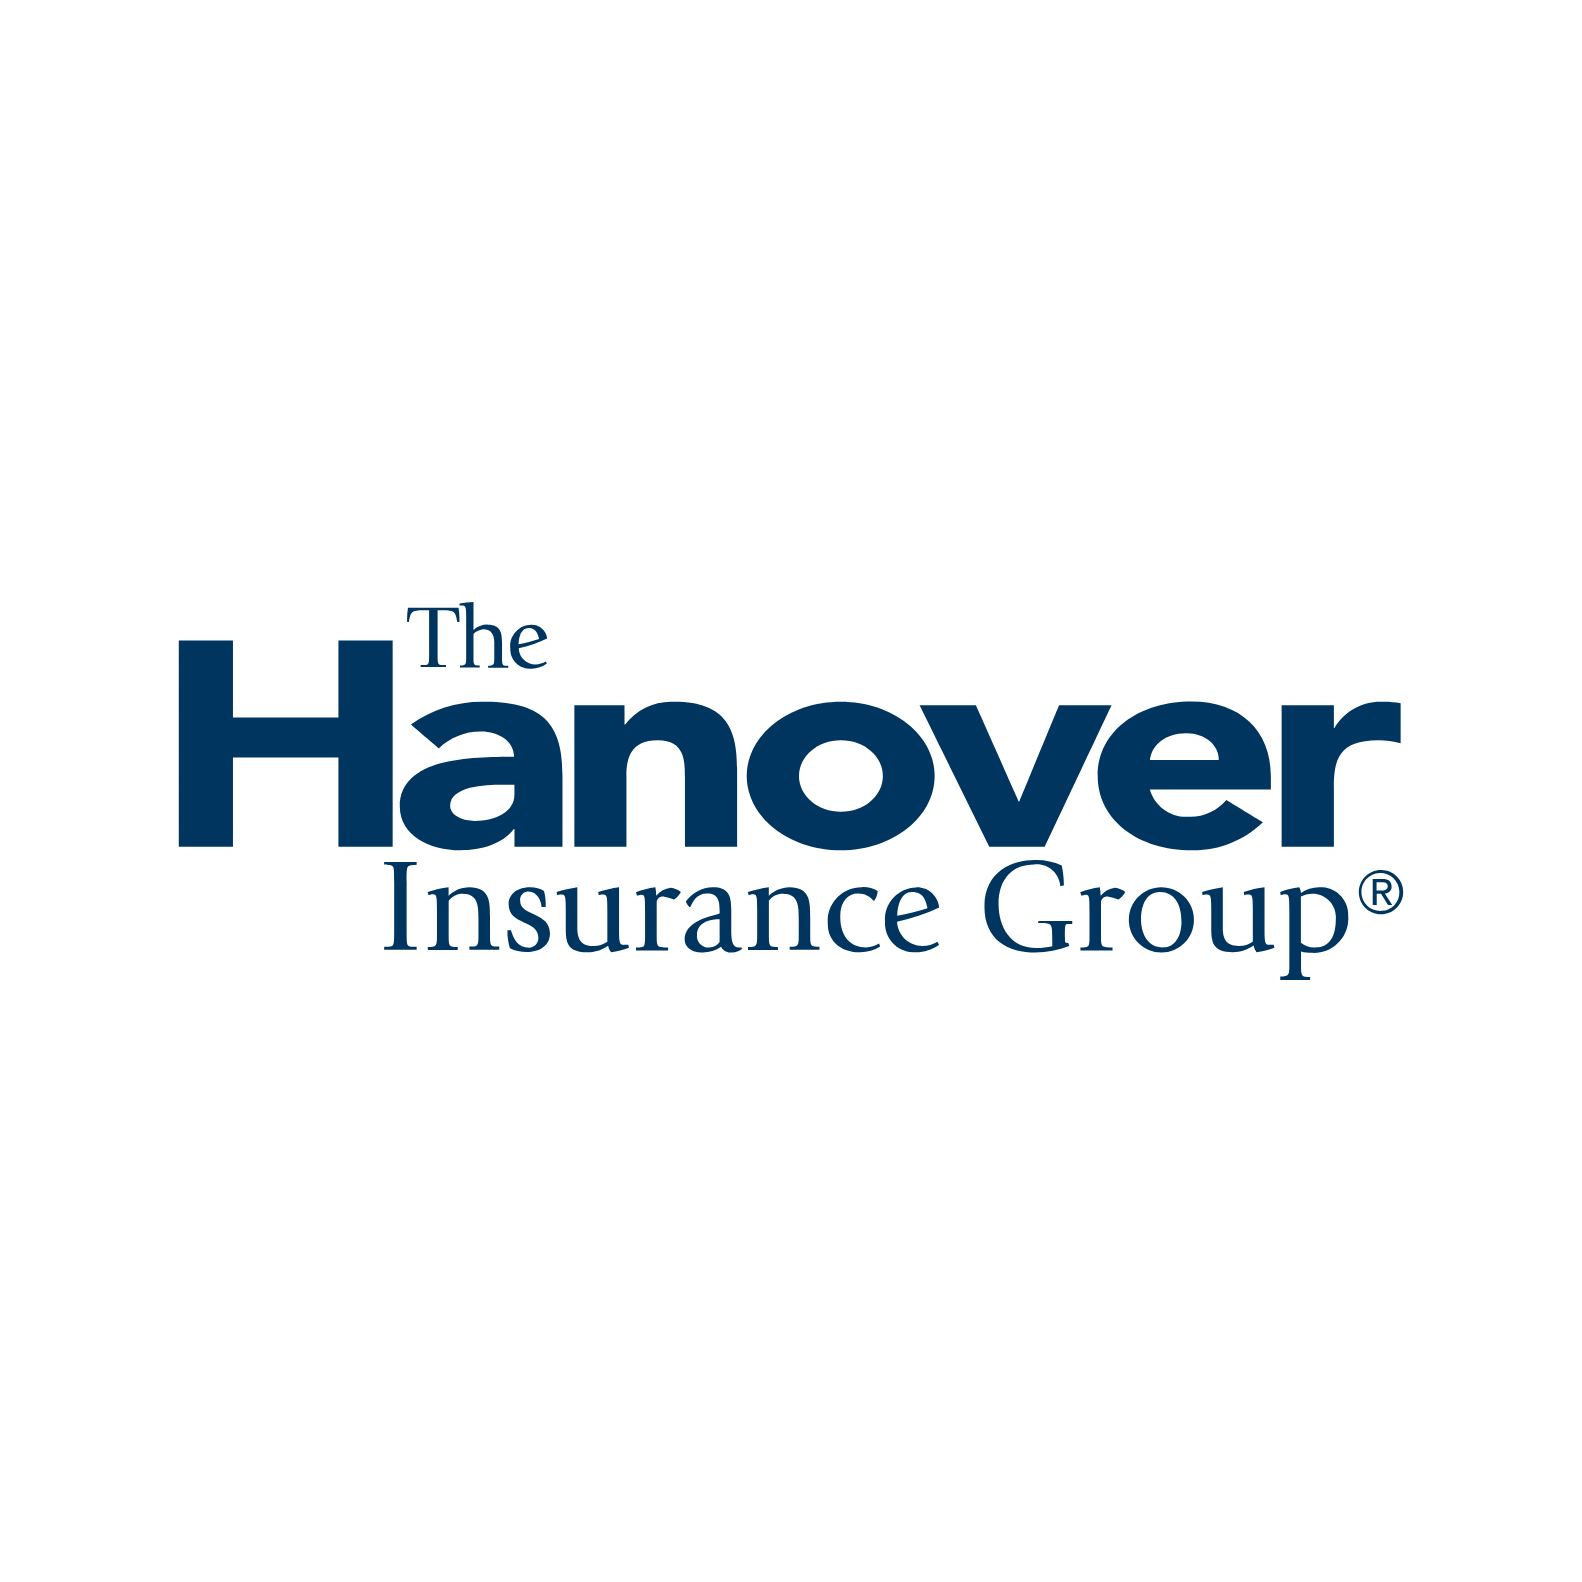 Hanover Insurance Group logo for dark backgrounds (transparent PNG)